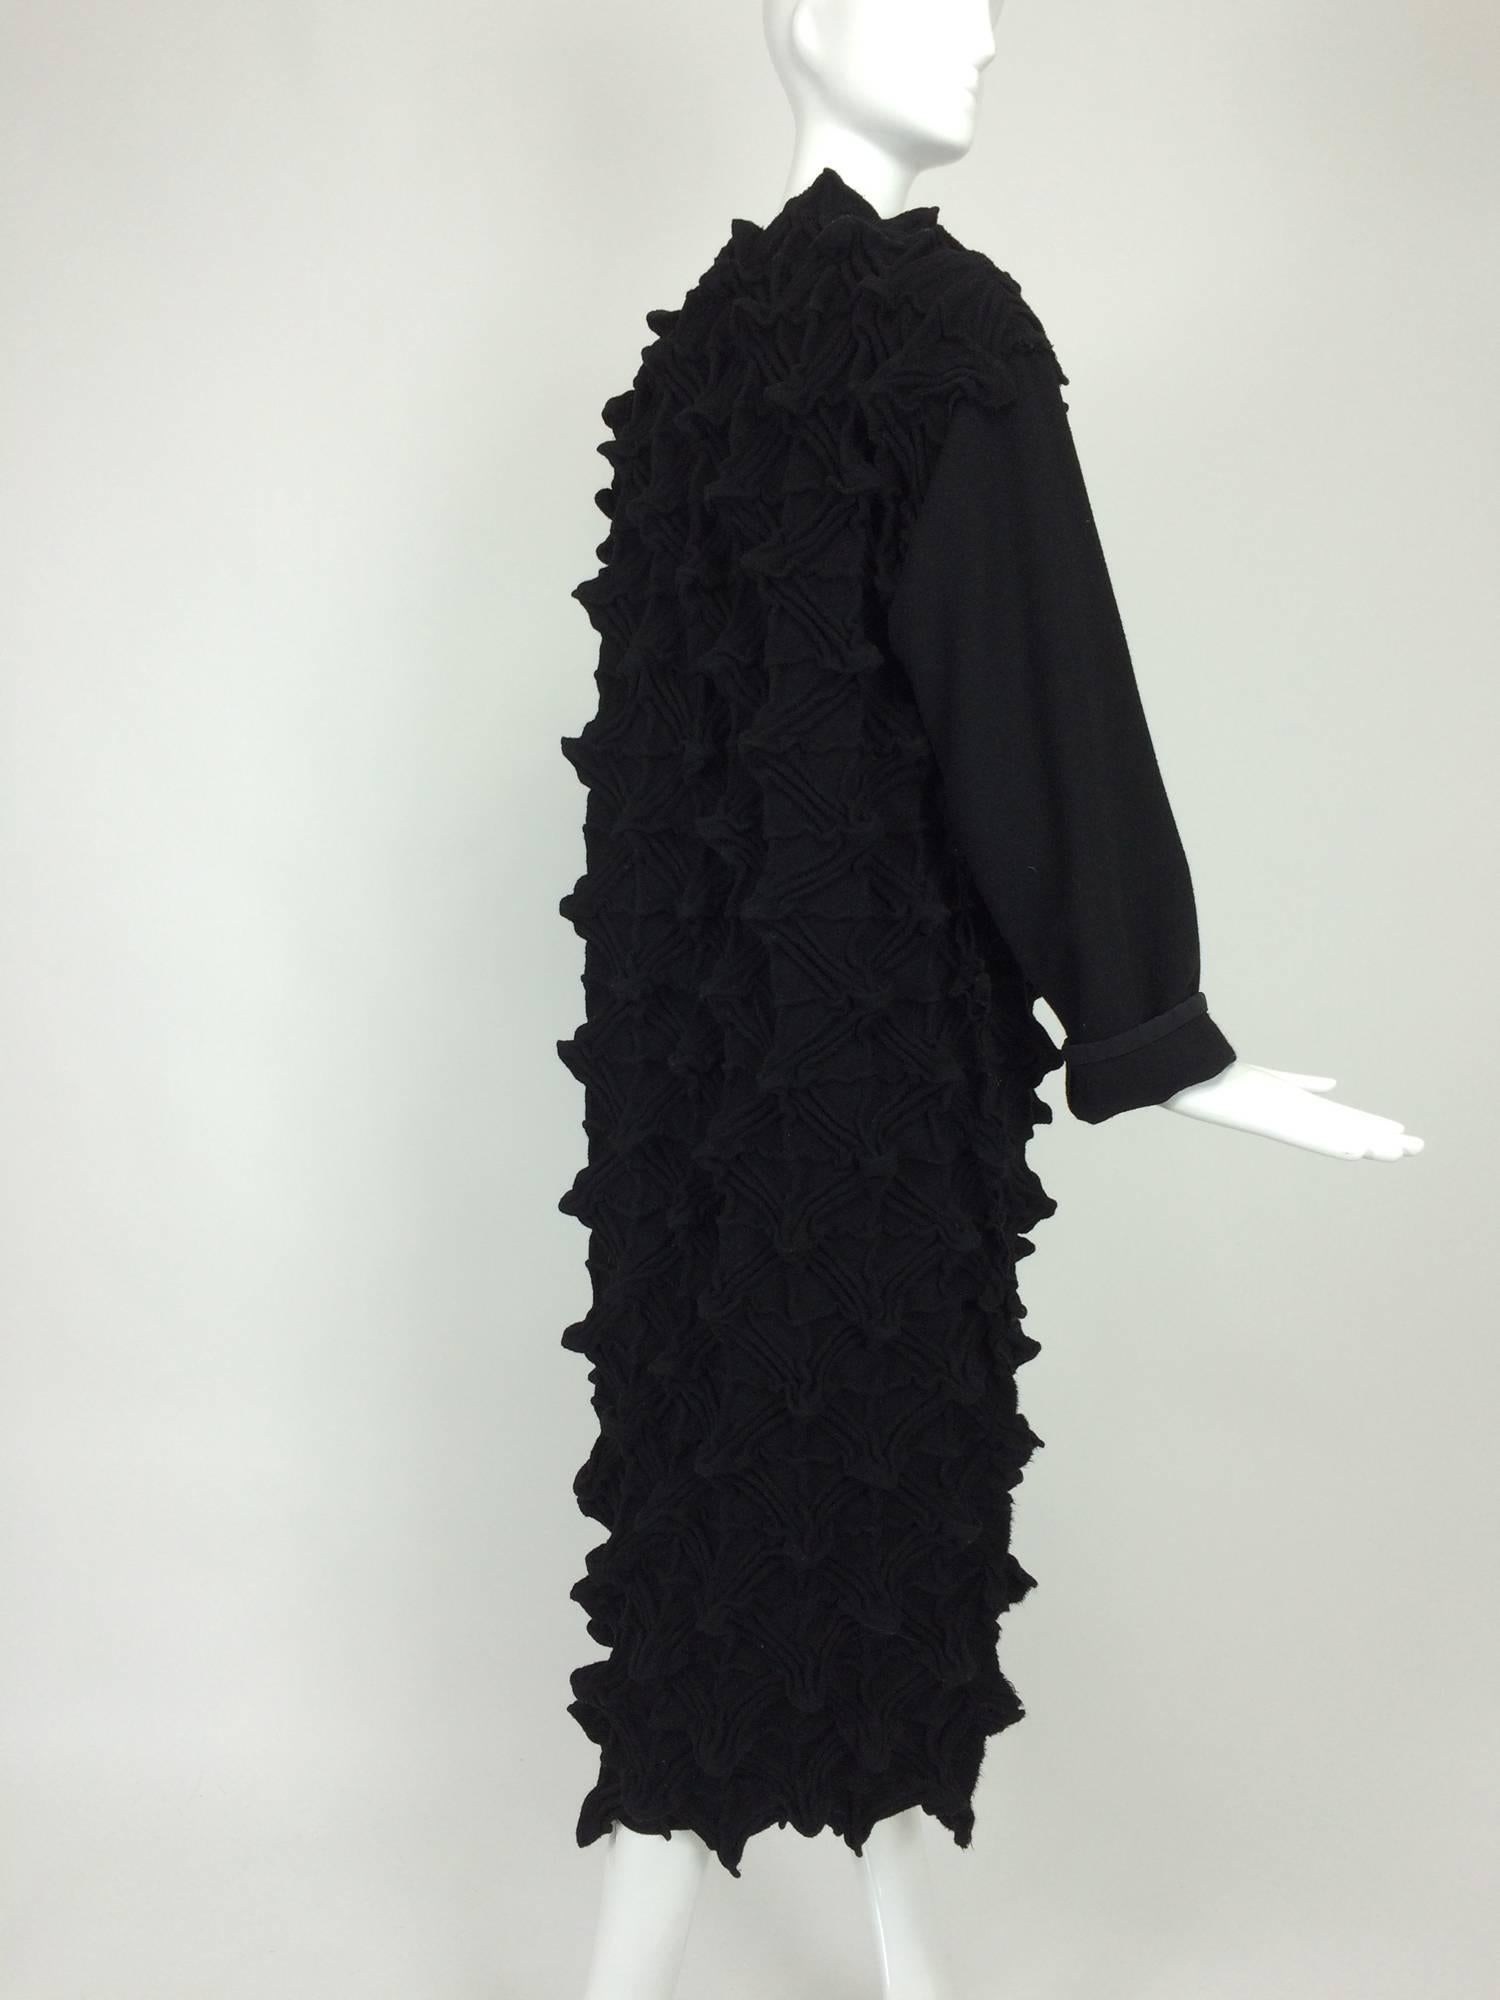 Women's Rare Mary E. Jaeger art to wear shibori manipulated wool coat one of a kind